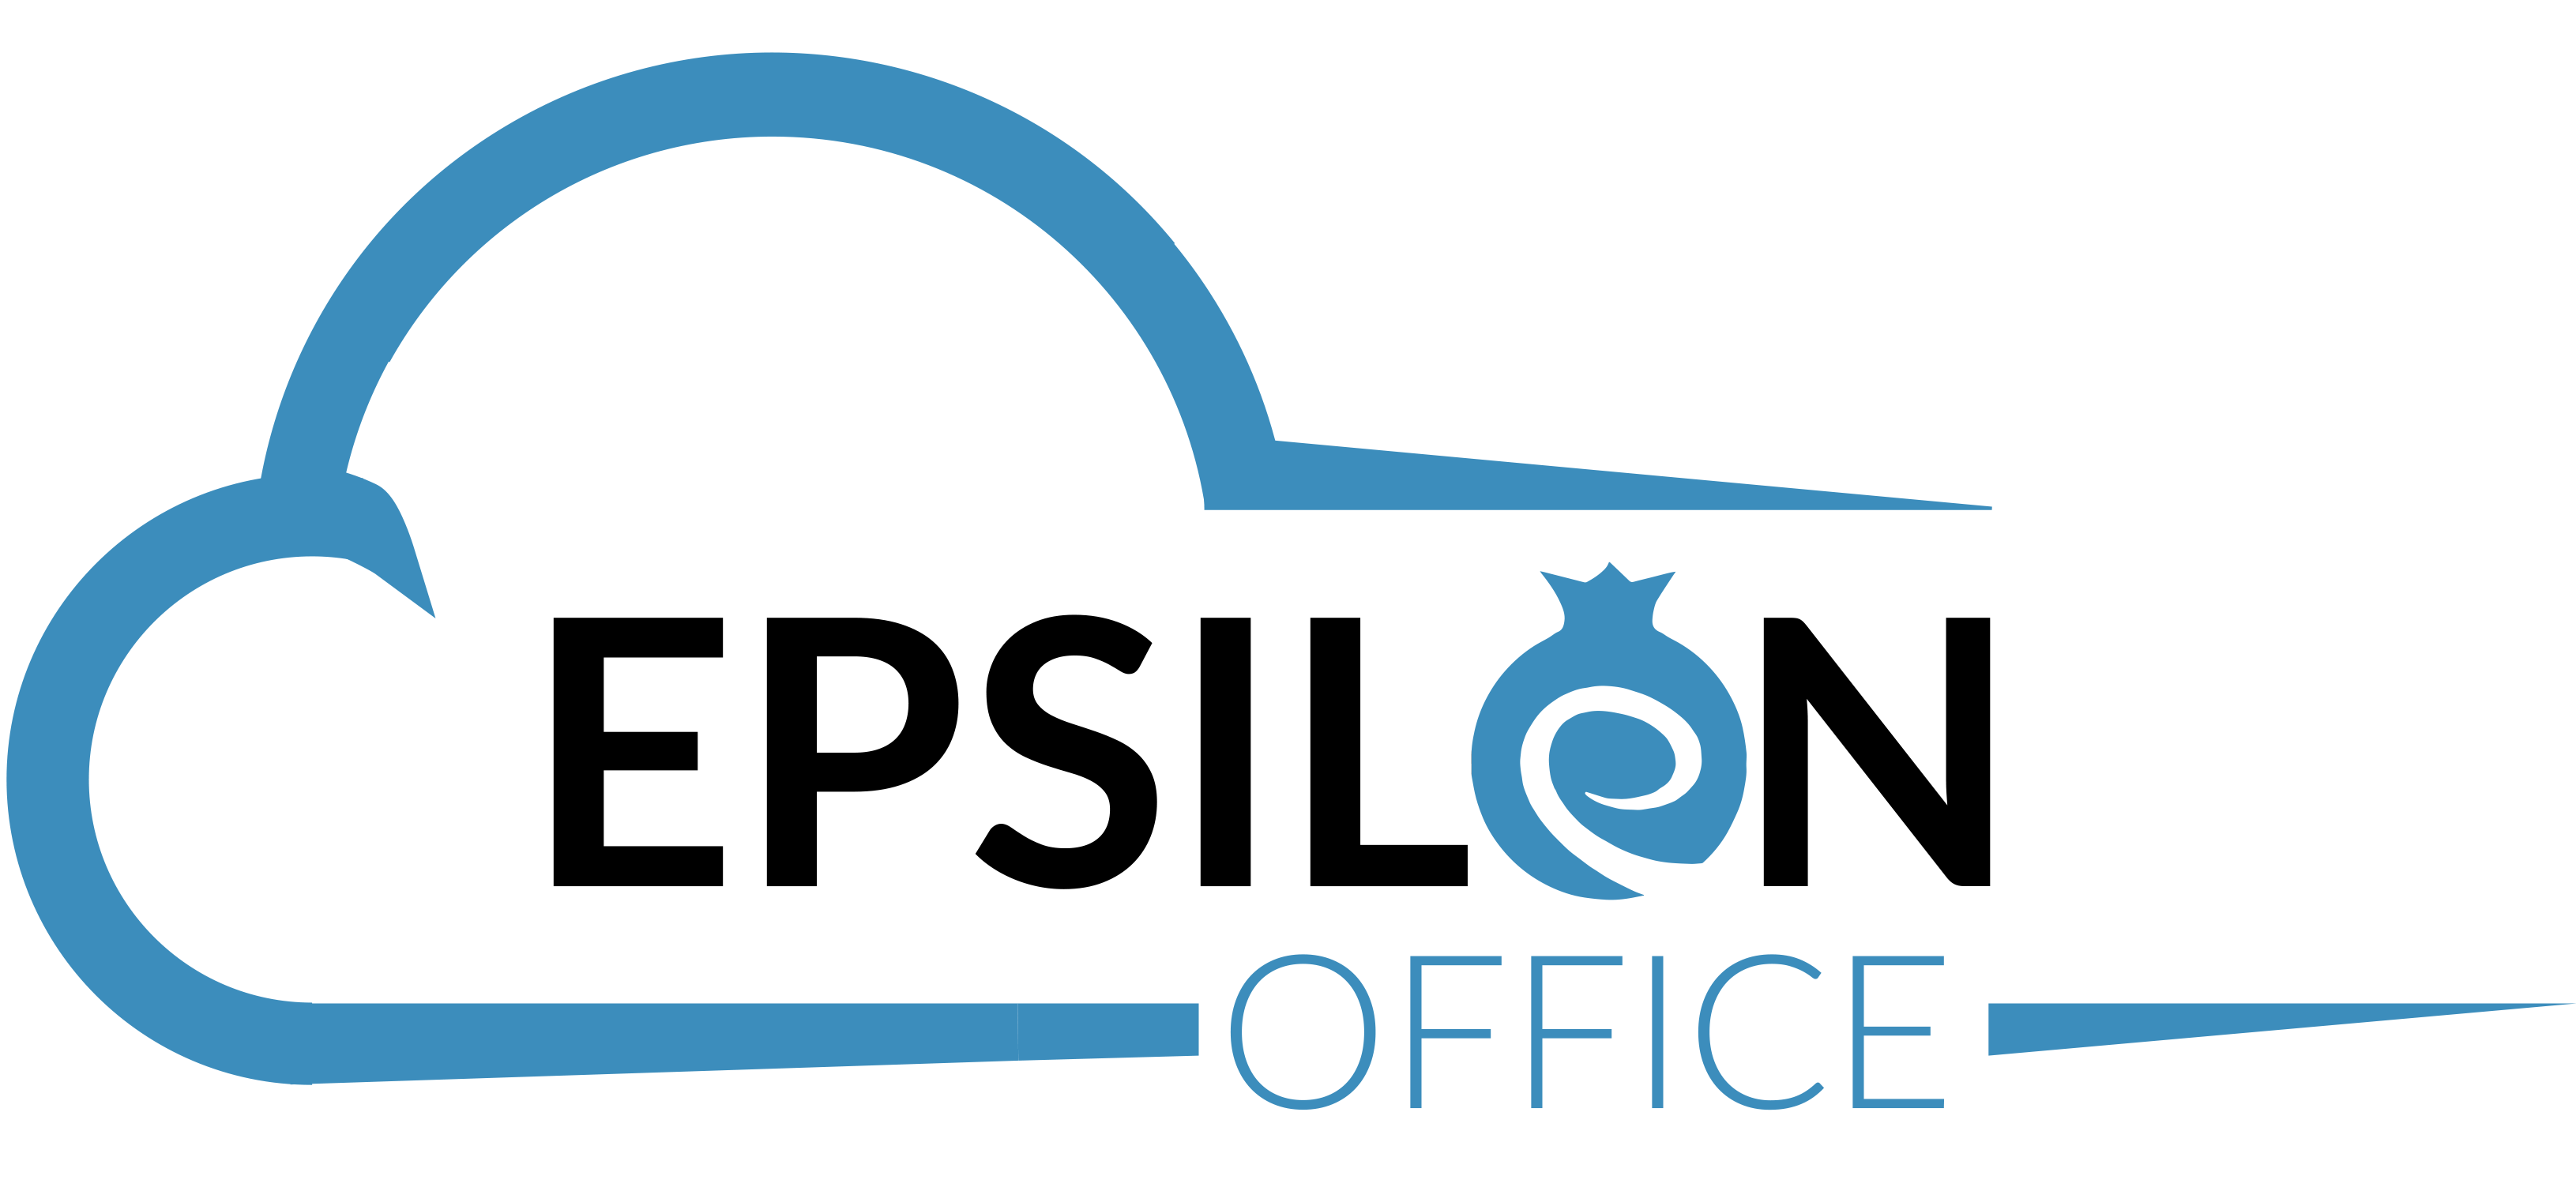 epsilon office logo